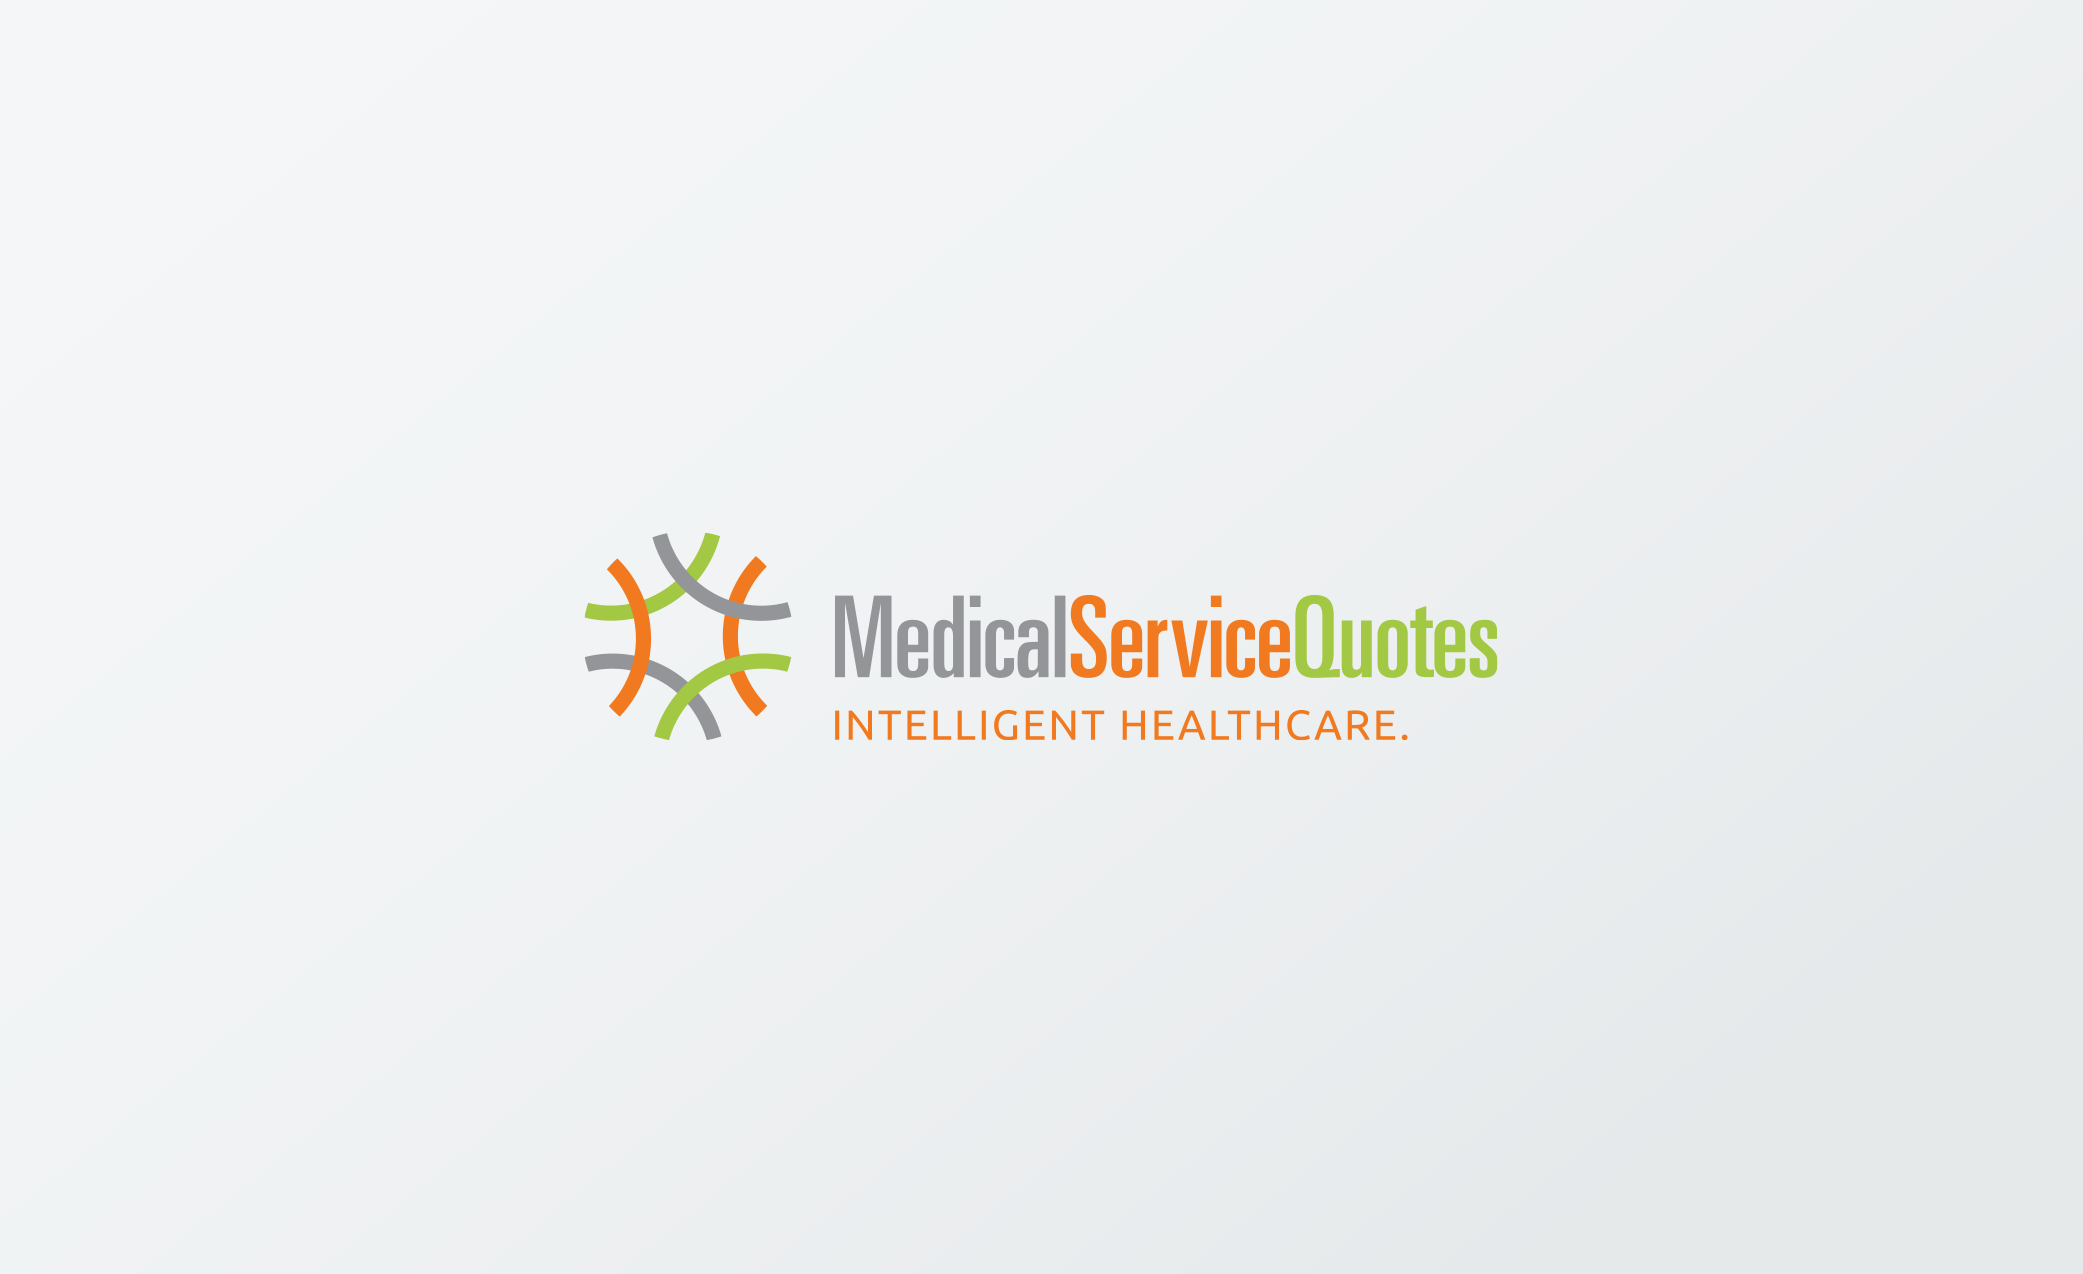 Medical Service Quotes healthcare logo